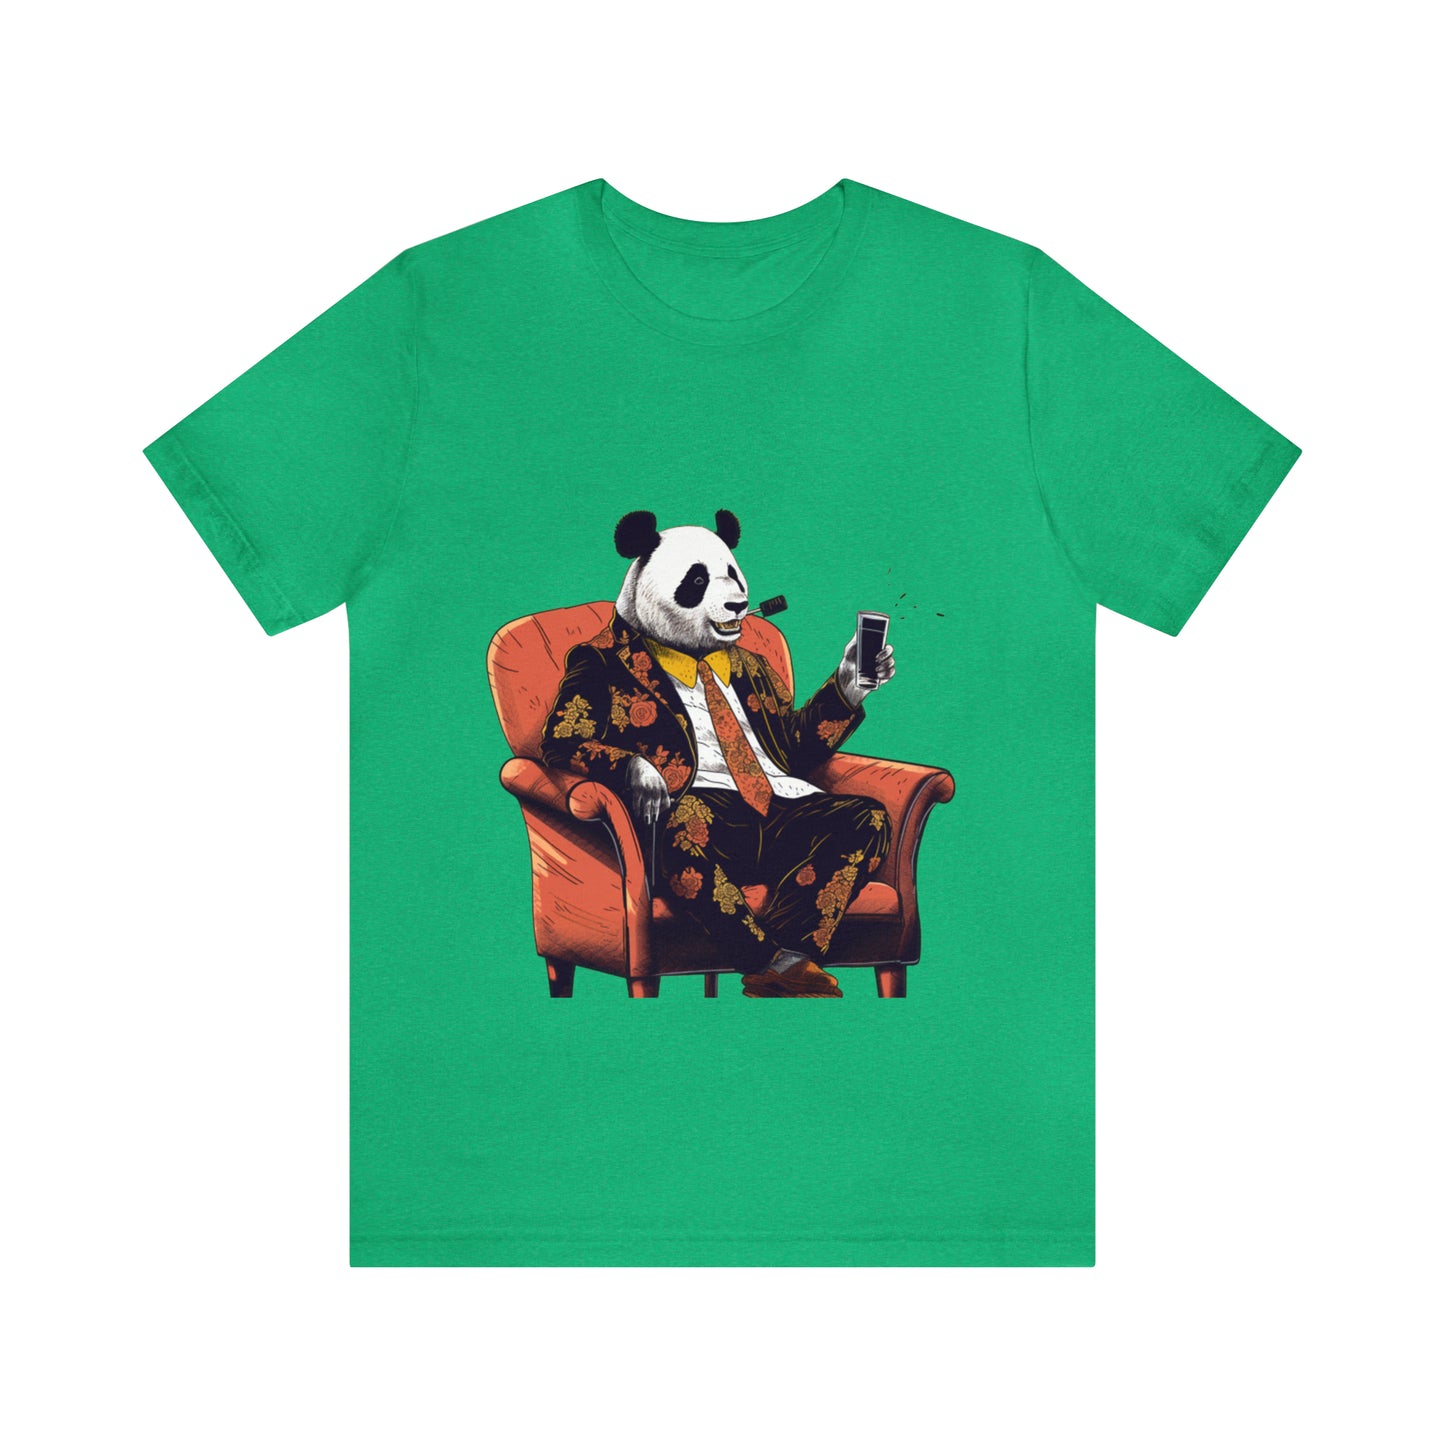 Bamboo Panda Talk Show Tee